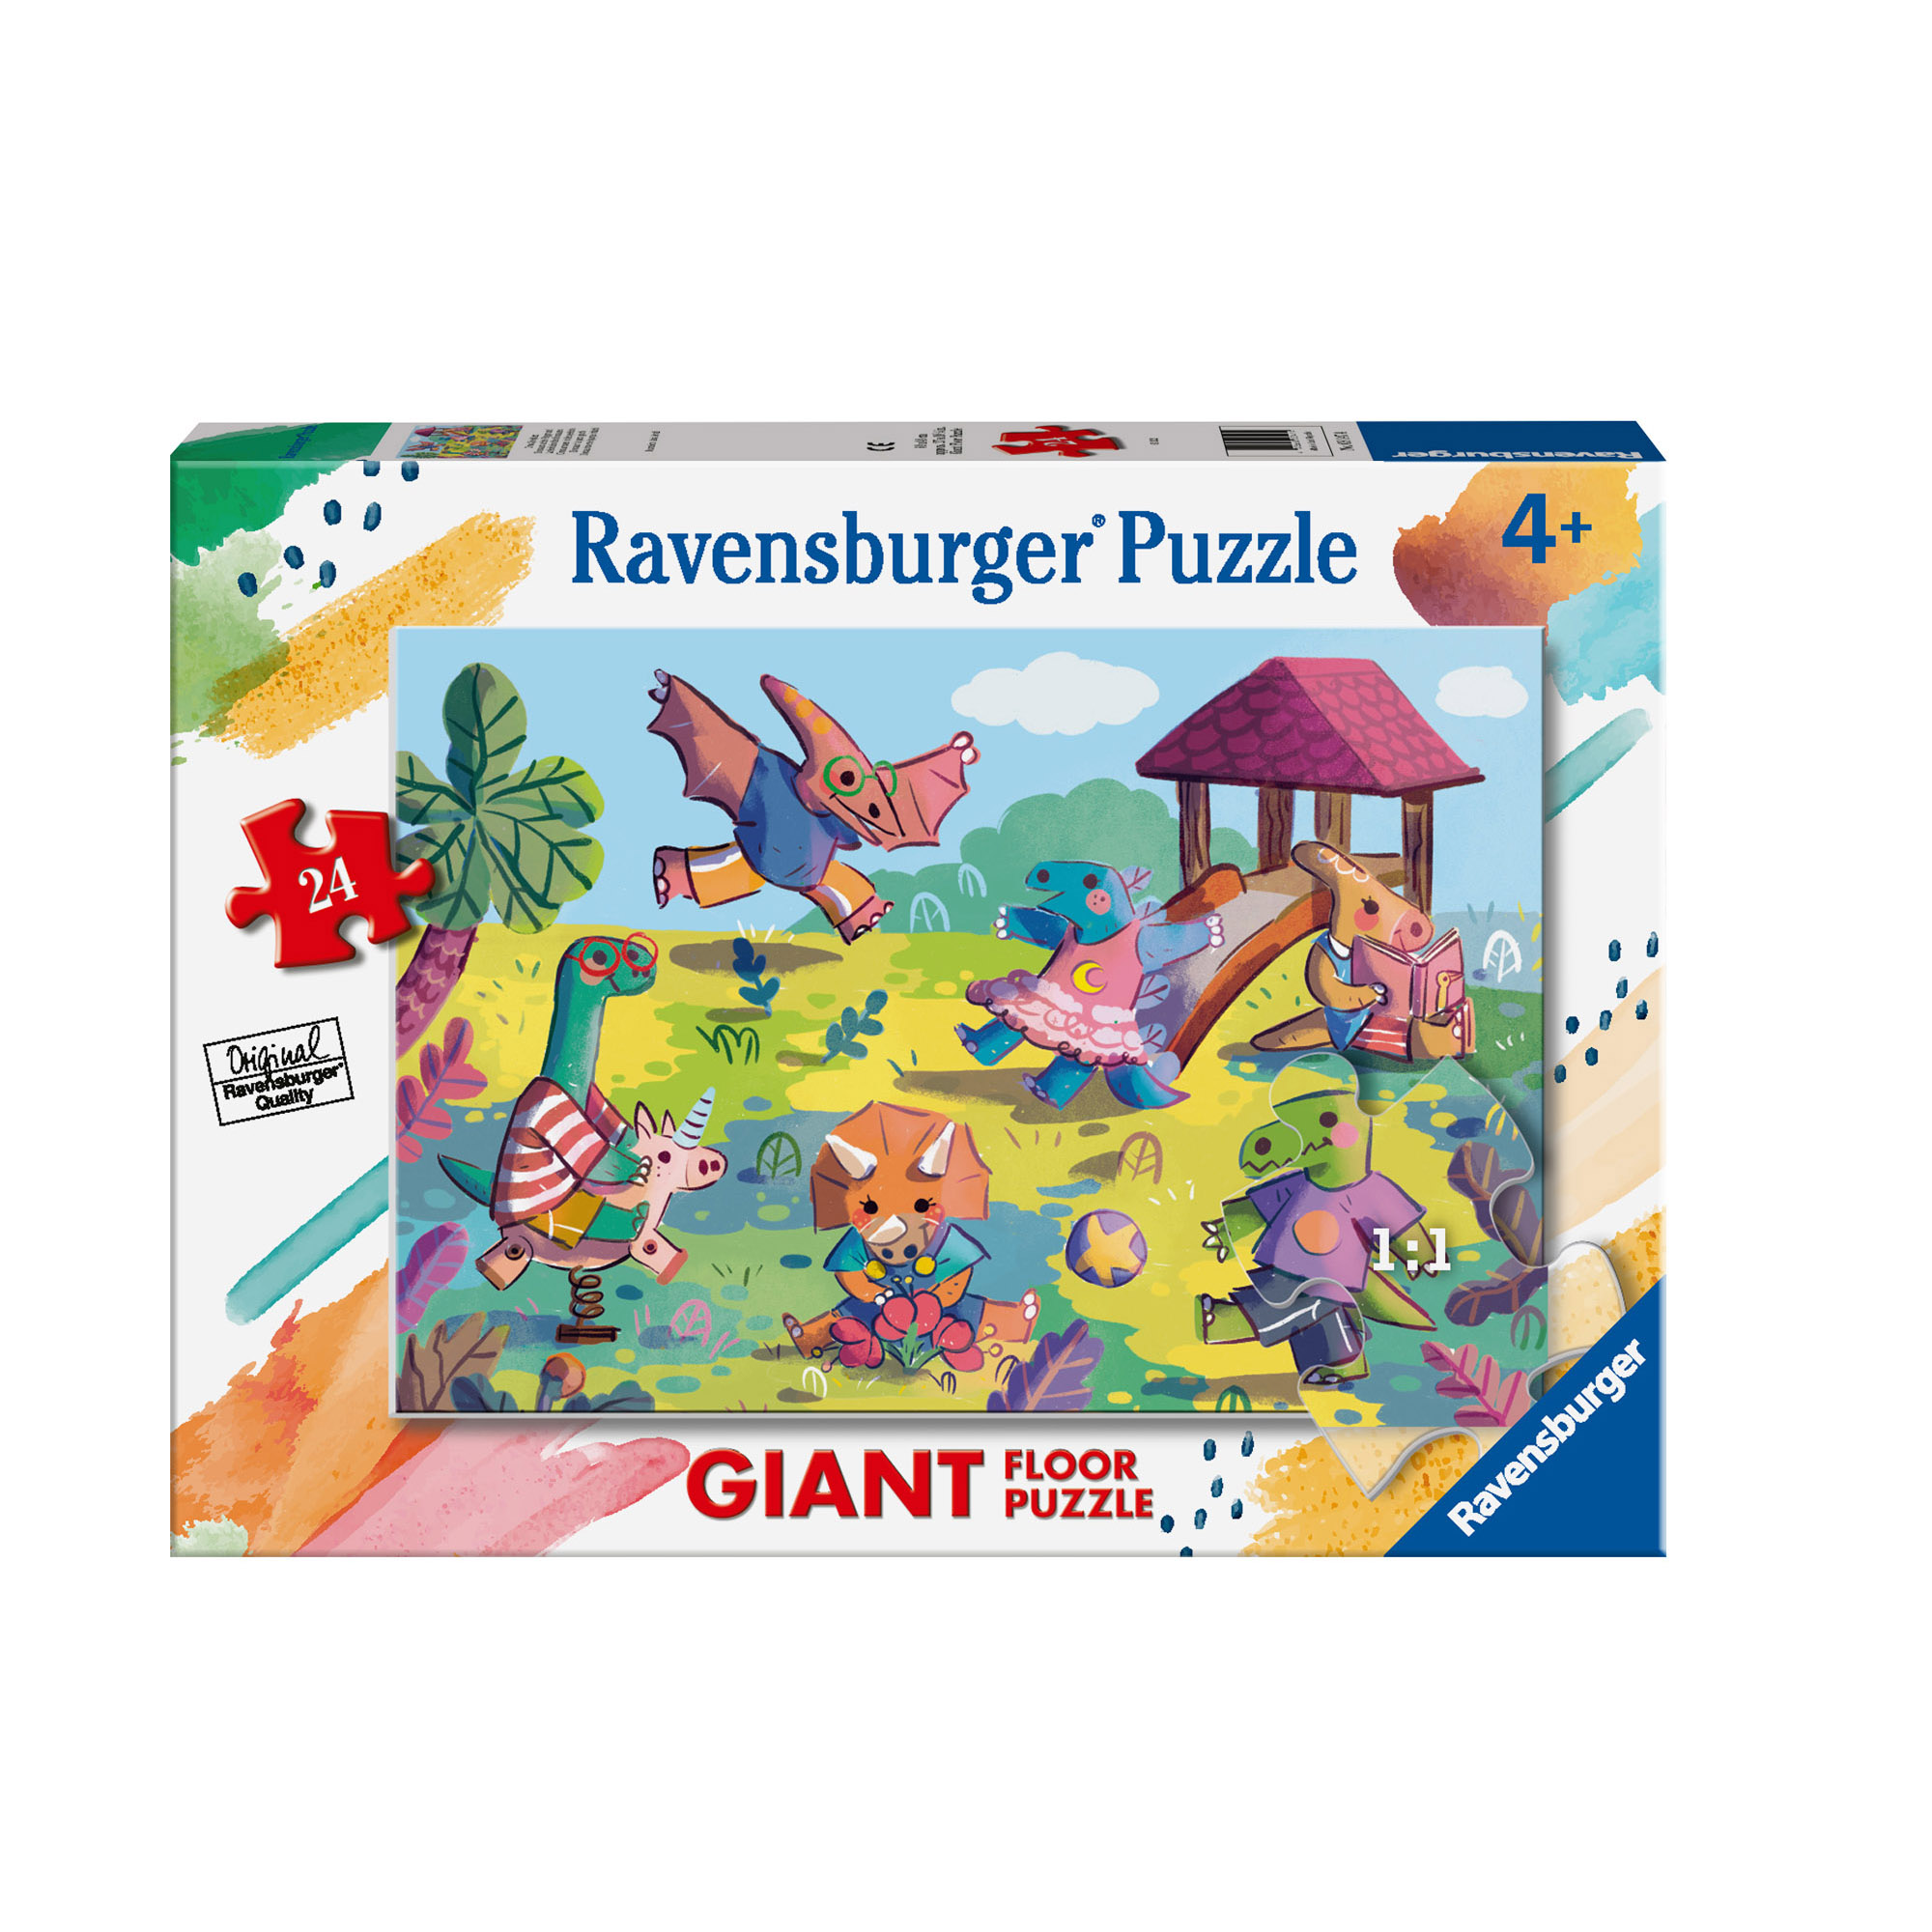 Ravensburger - puzzle dinosauri al parco giochi, collezione 24 giant pavimento, 24 pezzi, età raccomandata 3+ anni - RAVENSBURGER